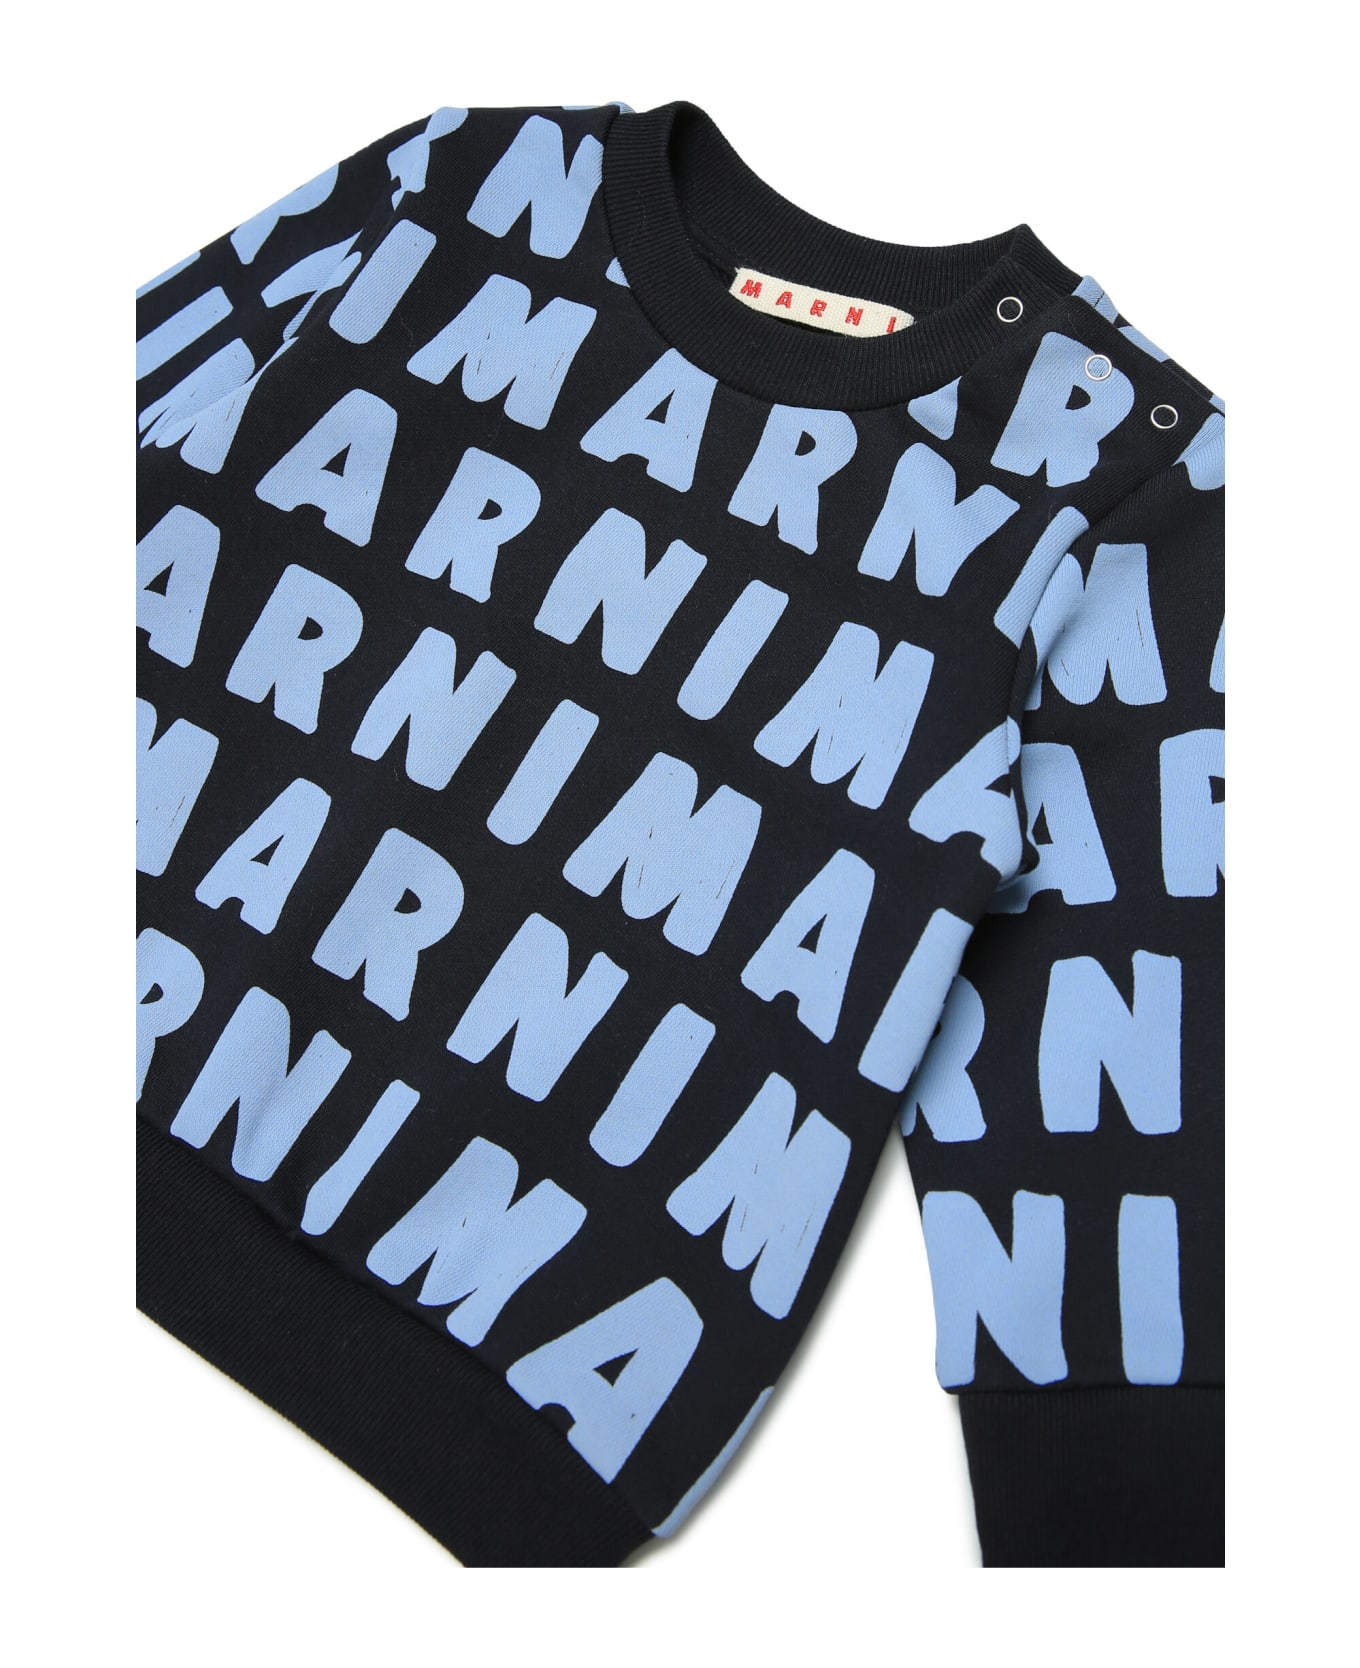 Marni Ms30b Sweat-shirt Marni - Blue navy